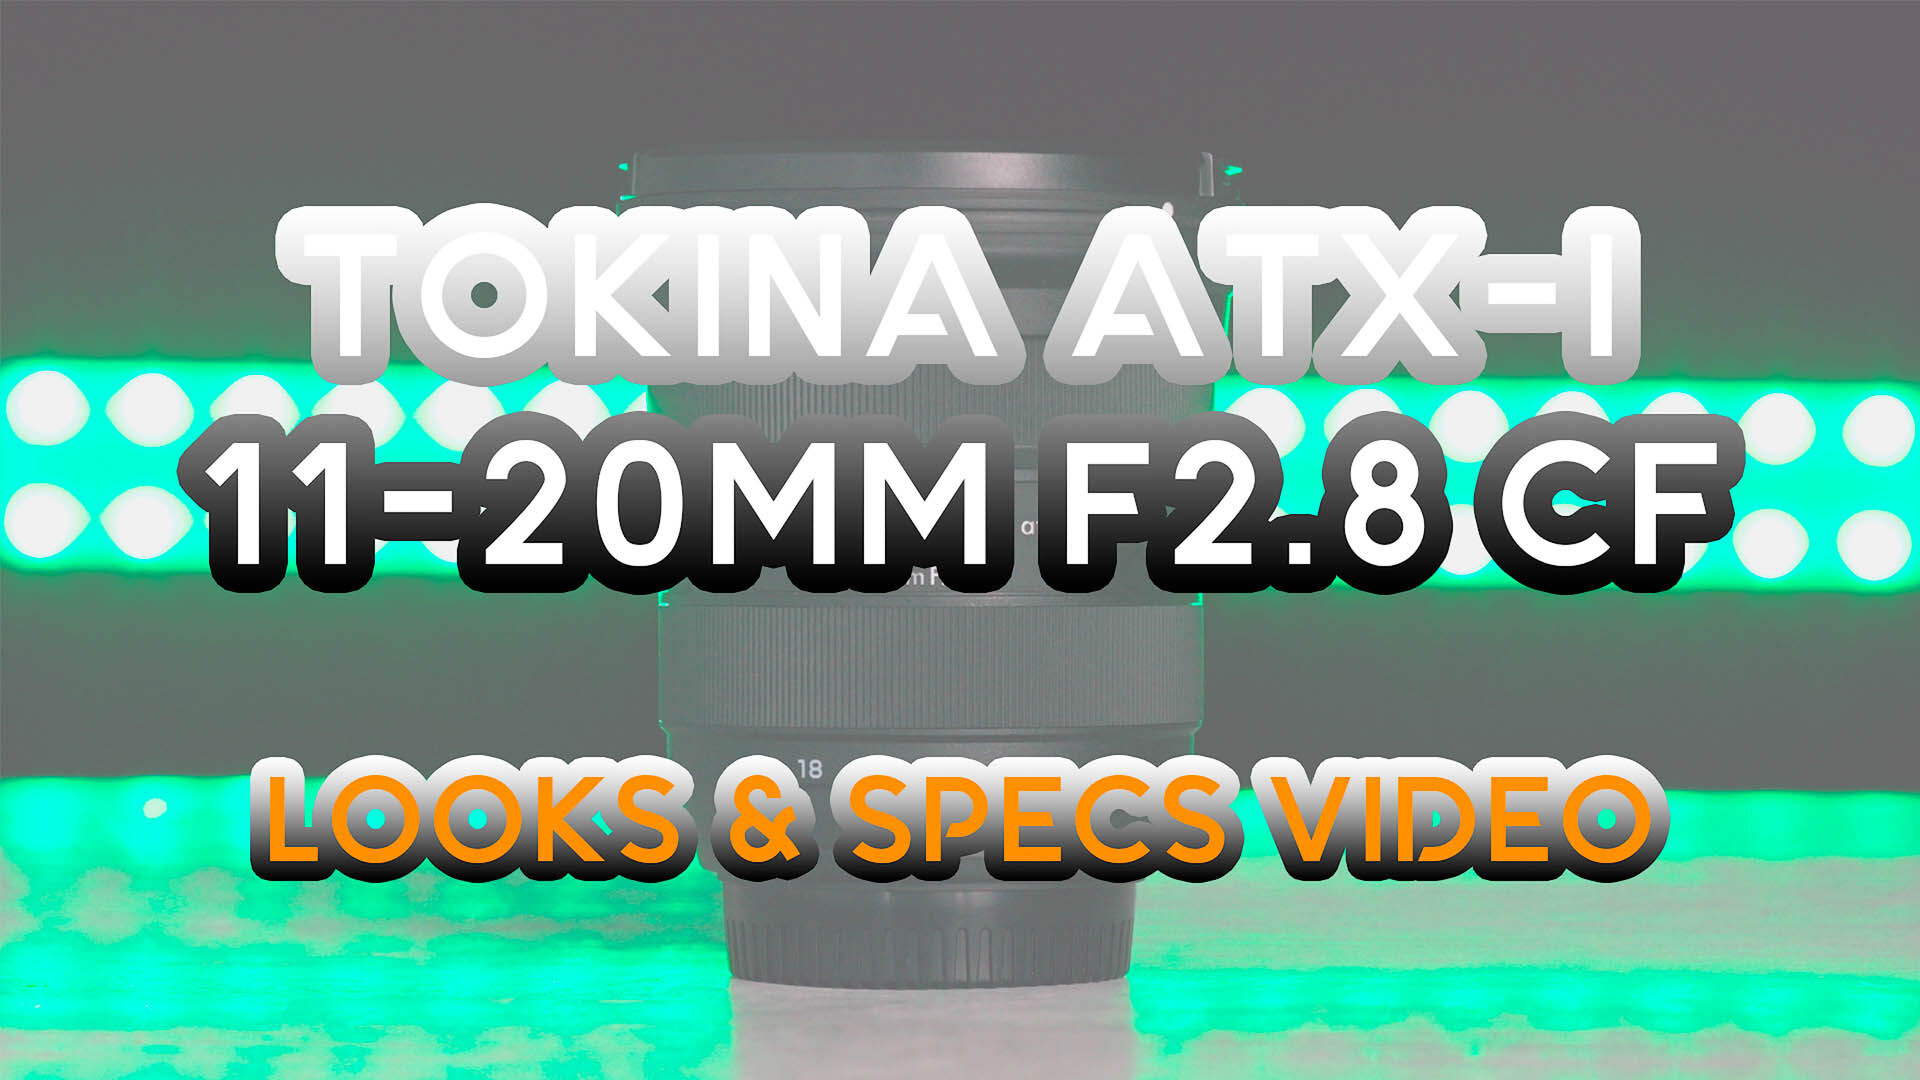 Tokina atx-i 11-20mm F2.8 CF – Teaser Hands-On Video & Specs